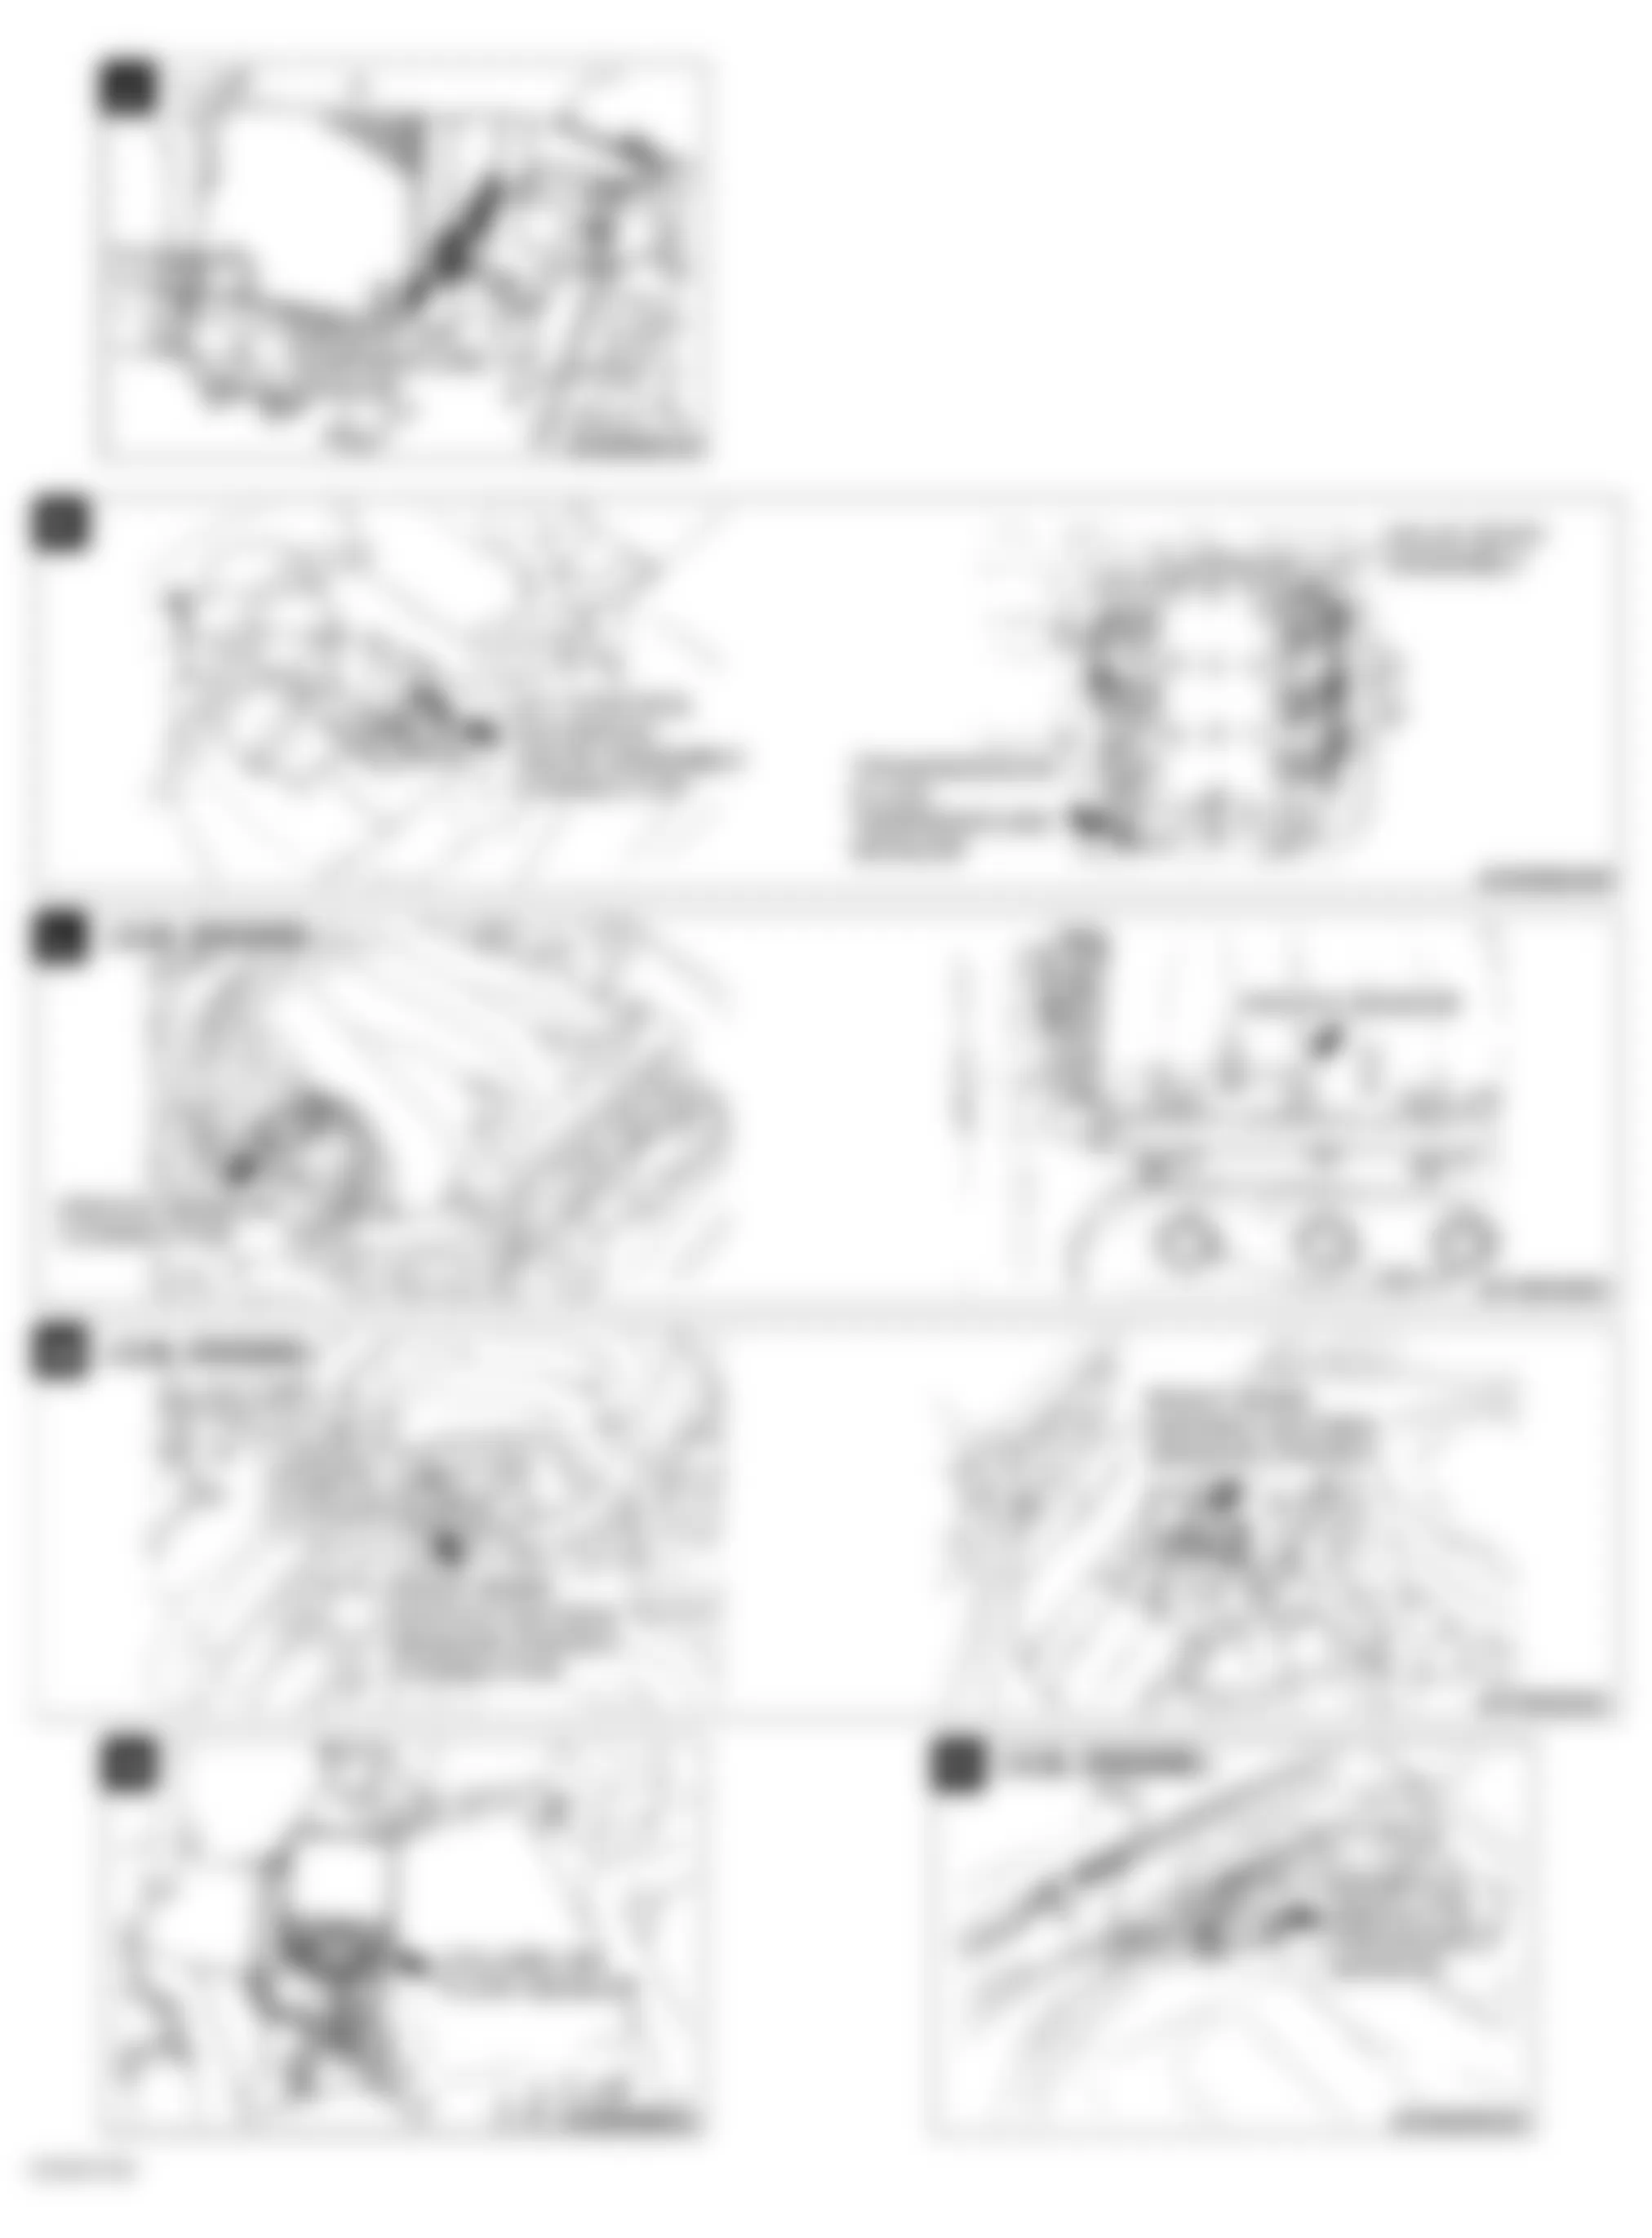 Dodge Stratus SE 2004 - Component Locations -  Sensor Views (3 Of 6)